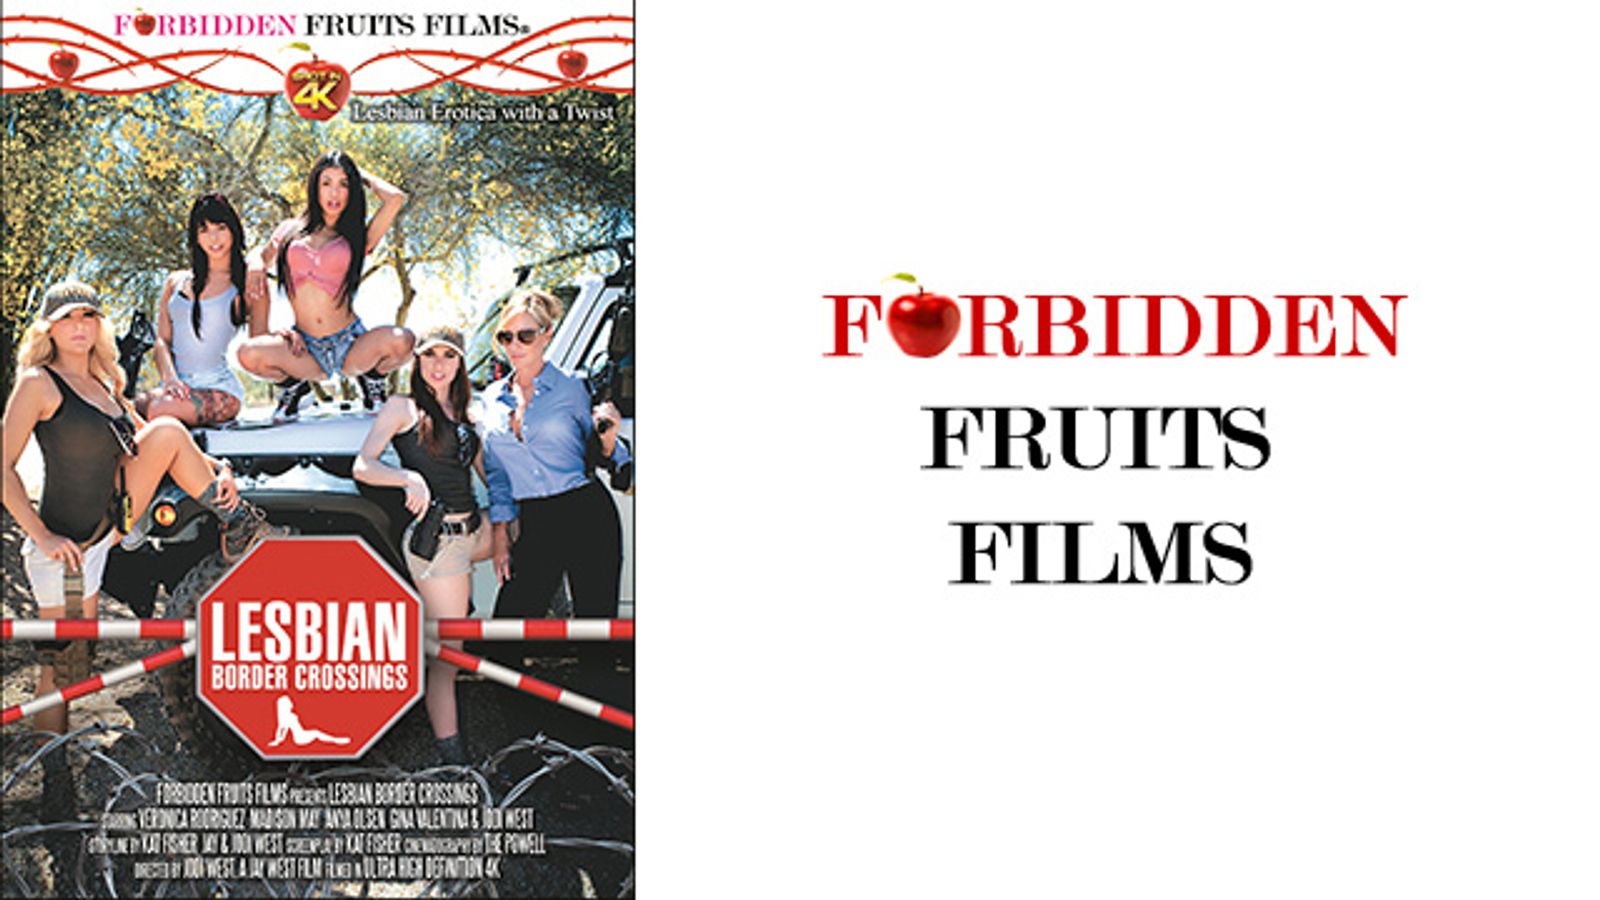 Forbidden Fruits Films Streets 'Lesbian Border Crossings'